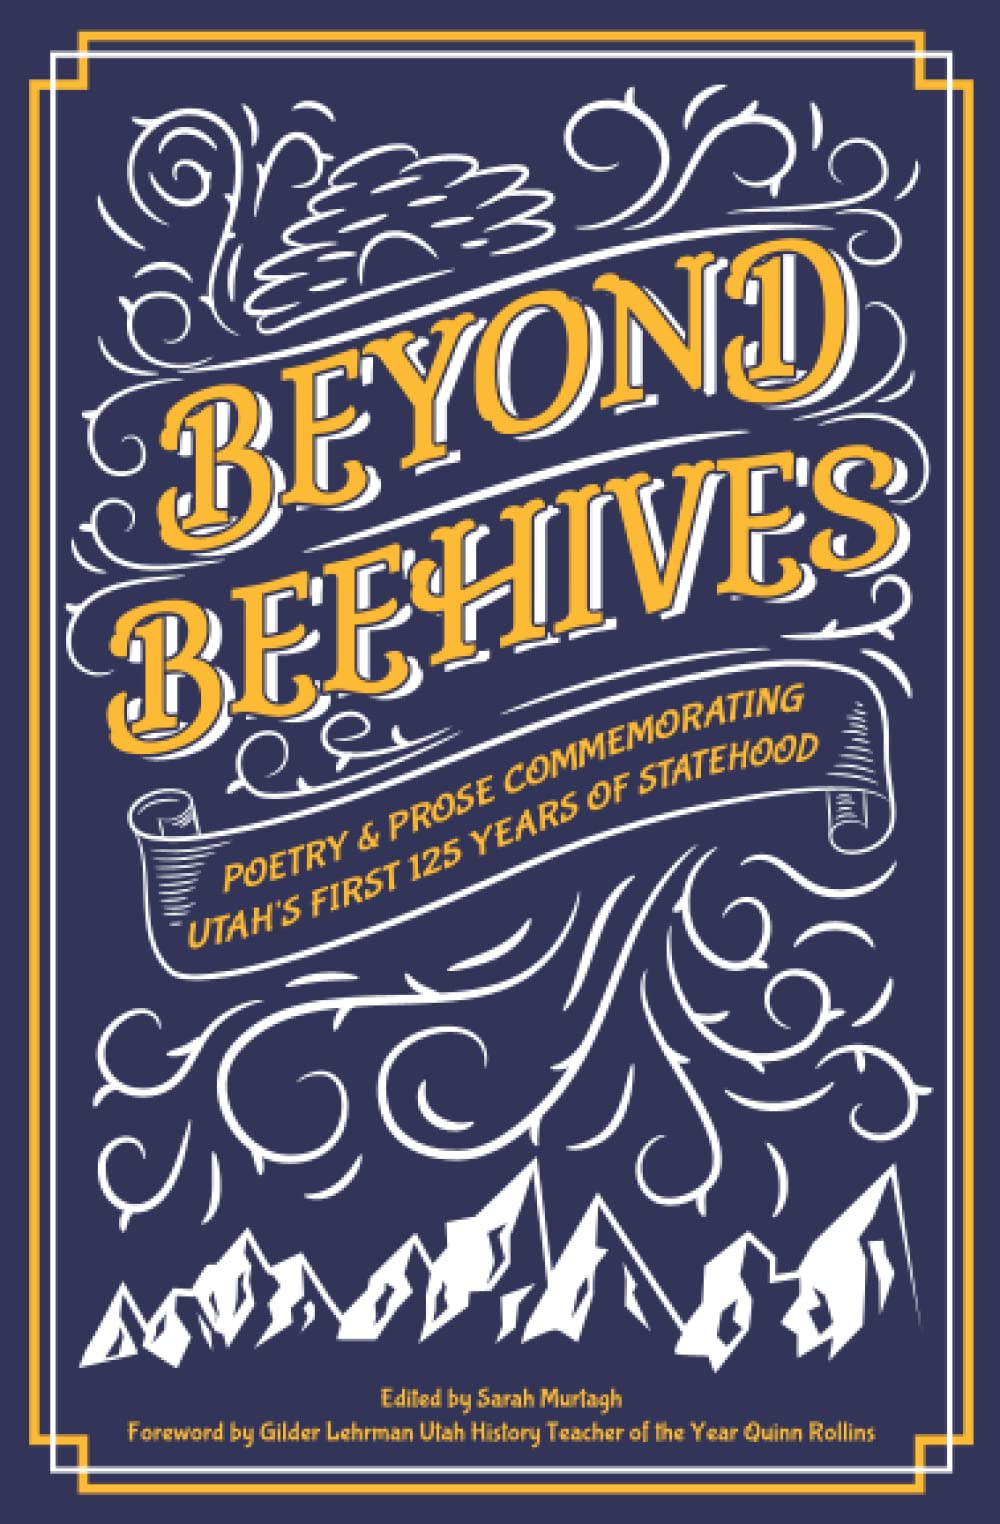 Beyond Beehives